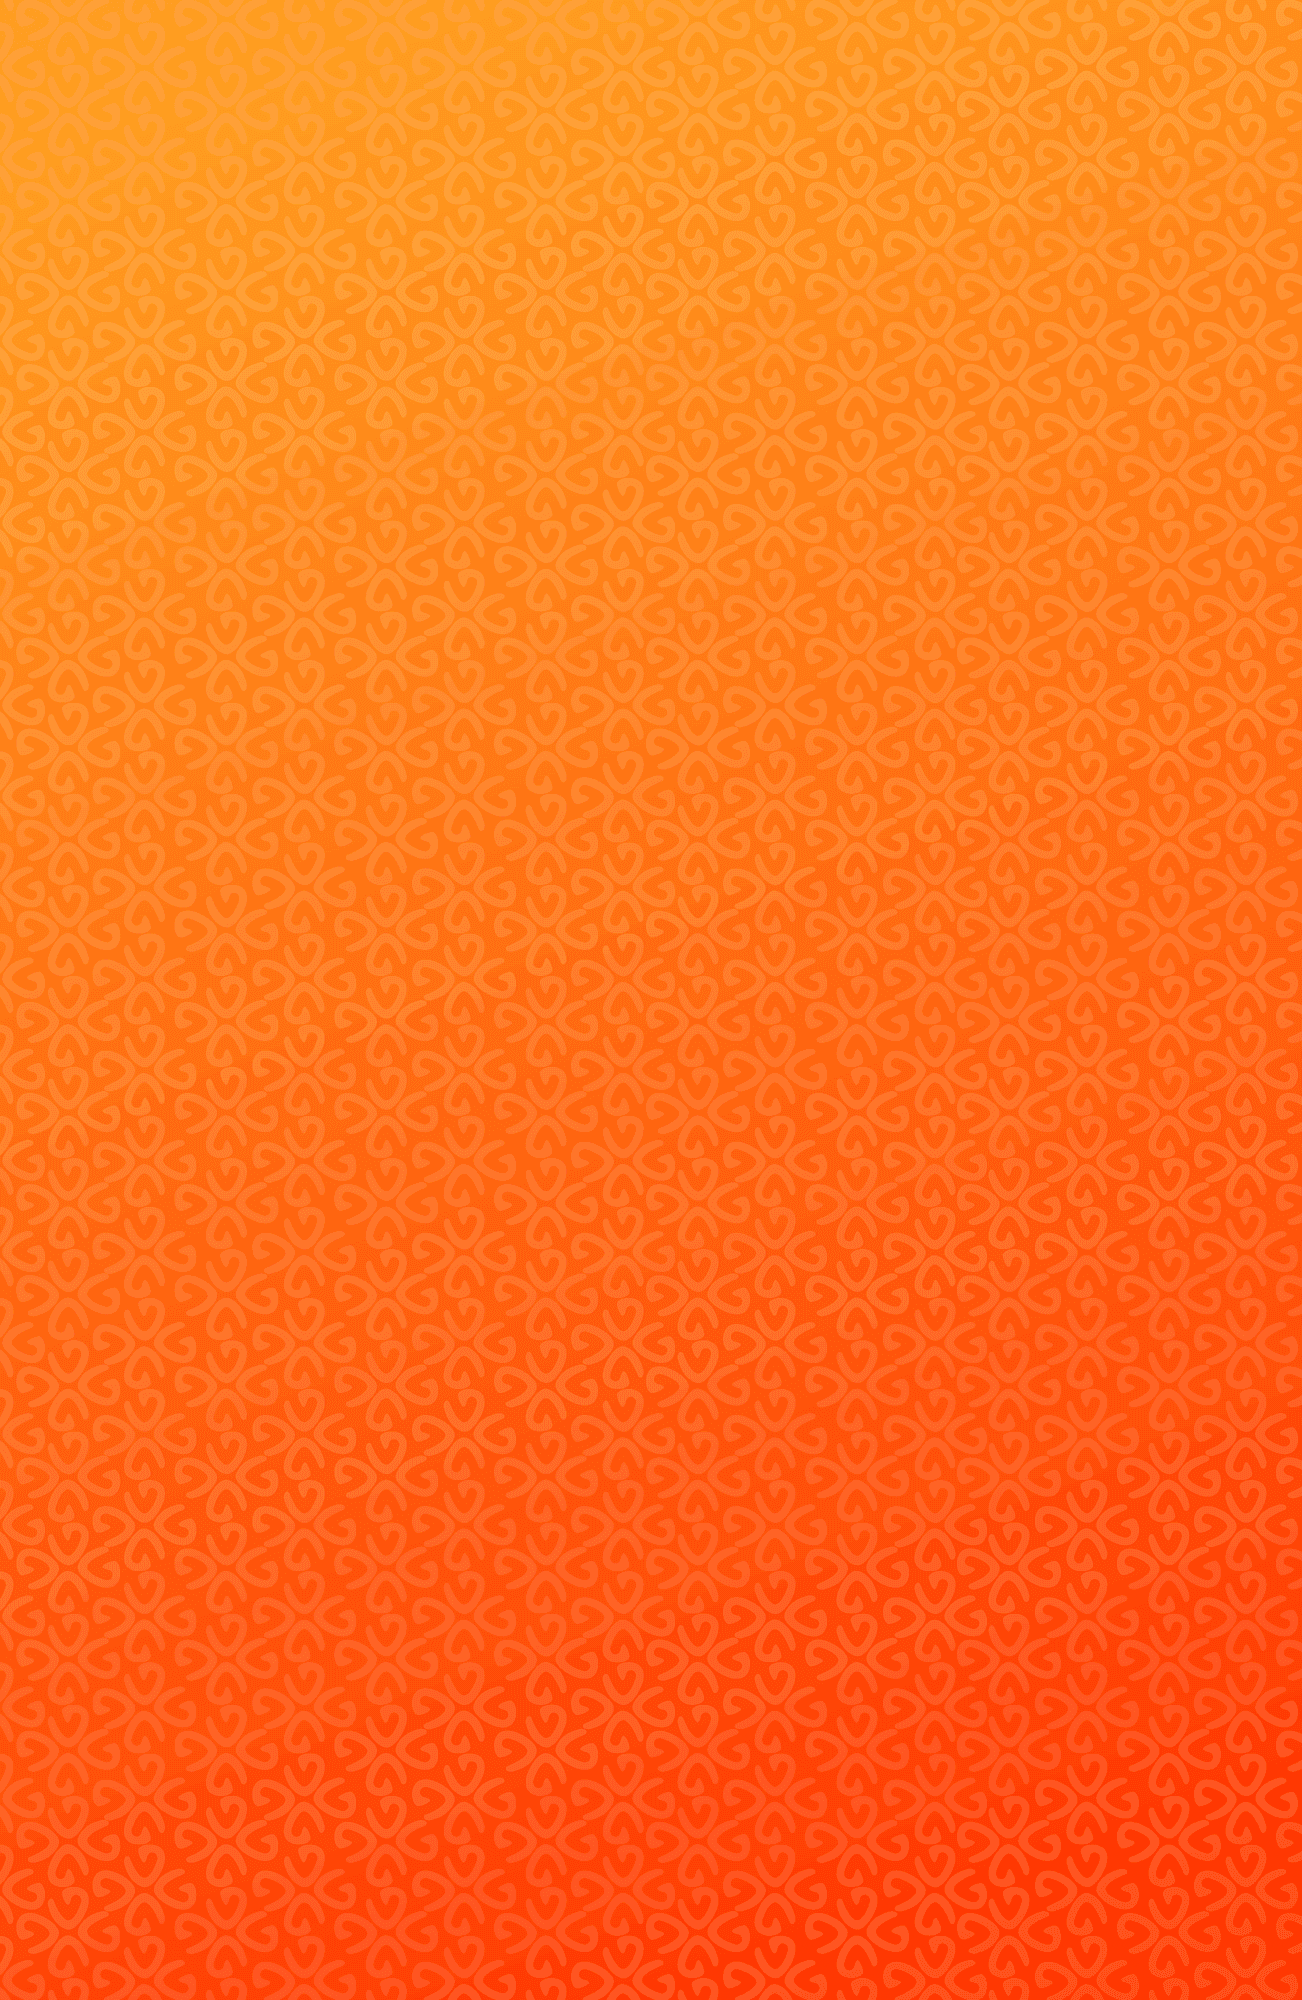 background orange with small vico logos